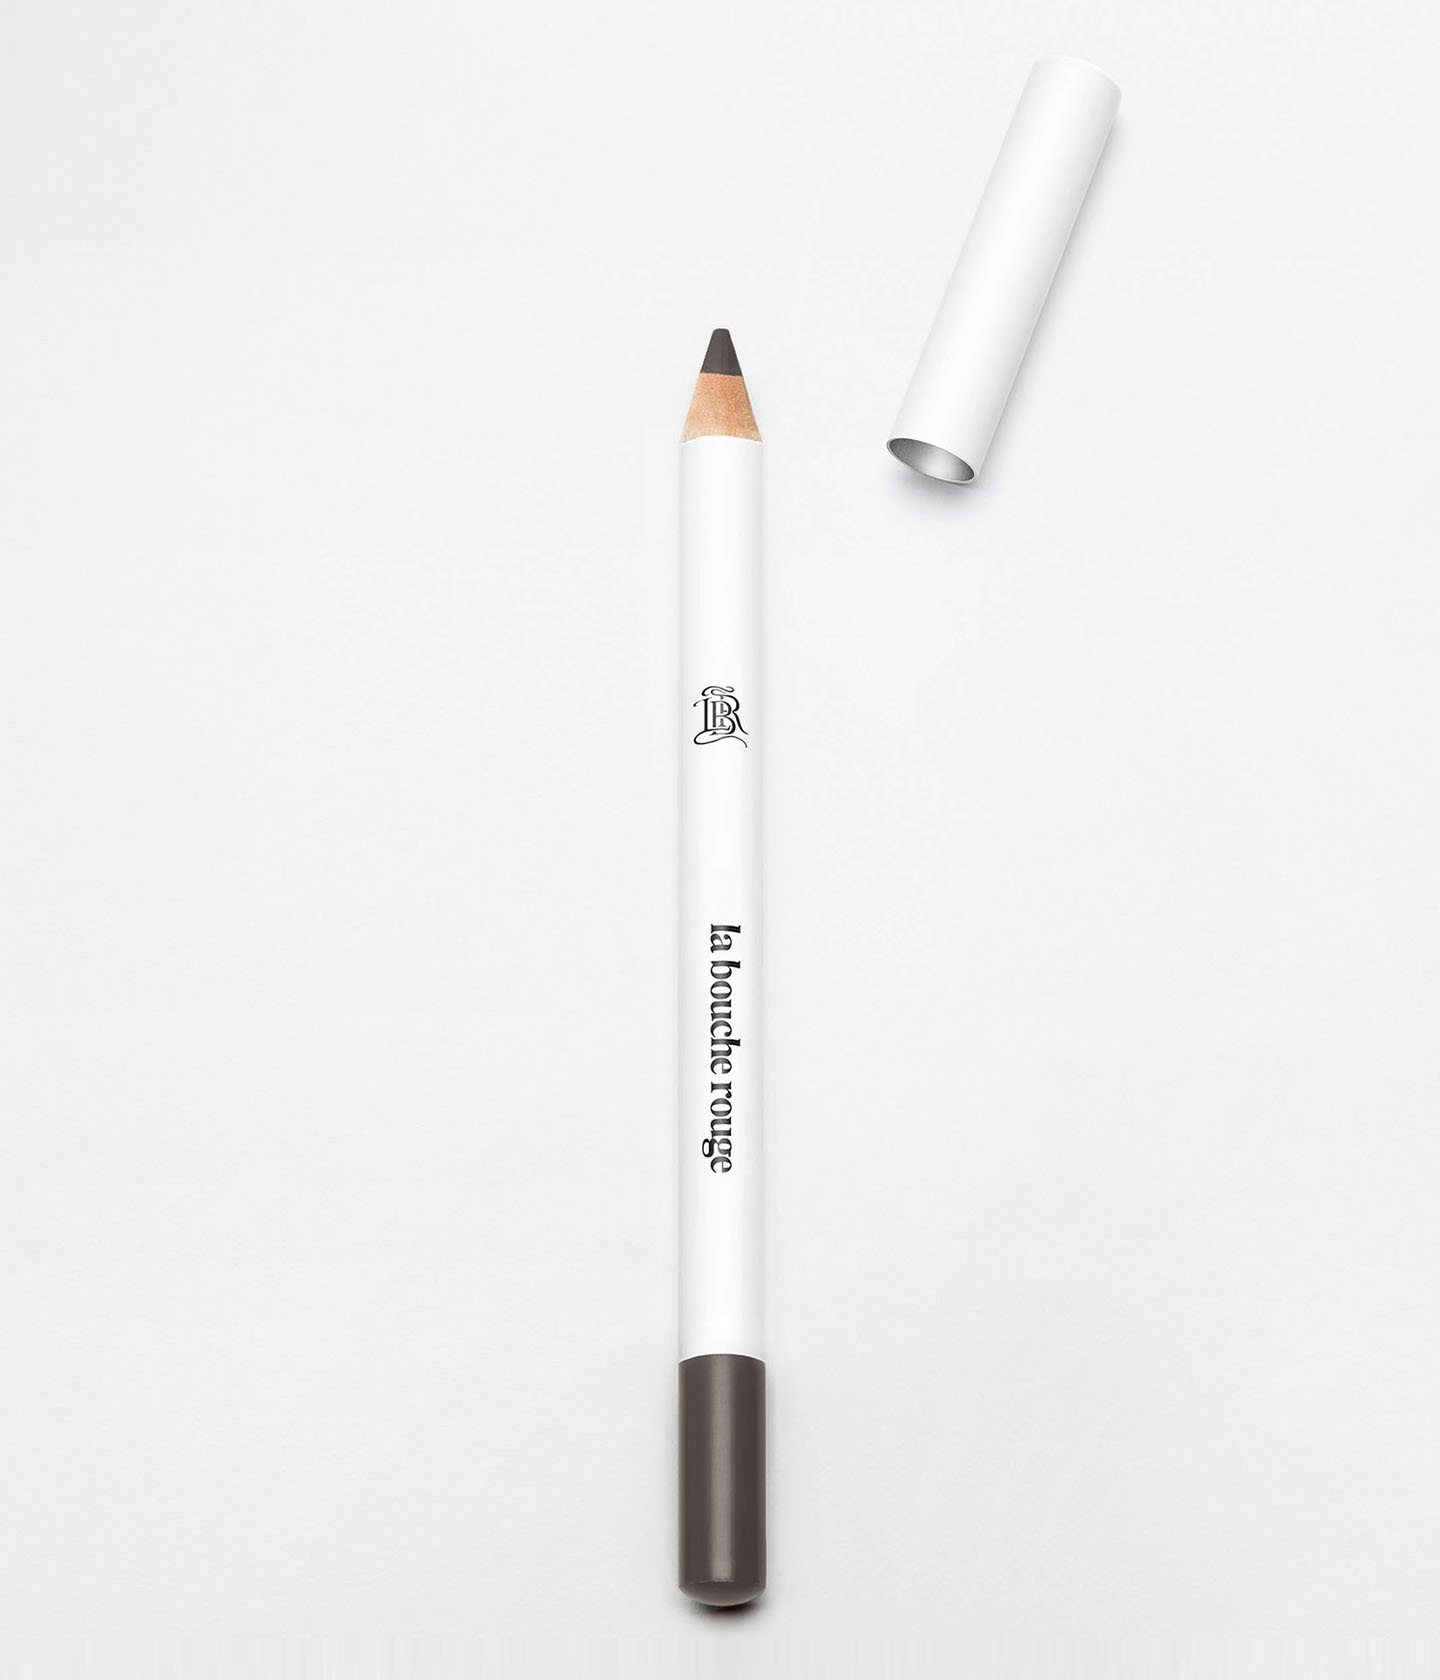 La bouche rouge black eyebrow pencil with recyclable metal cap